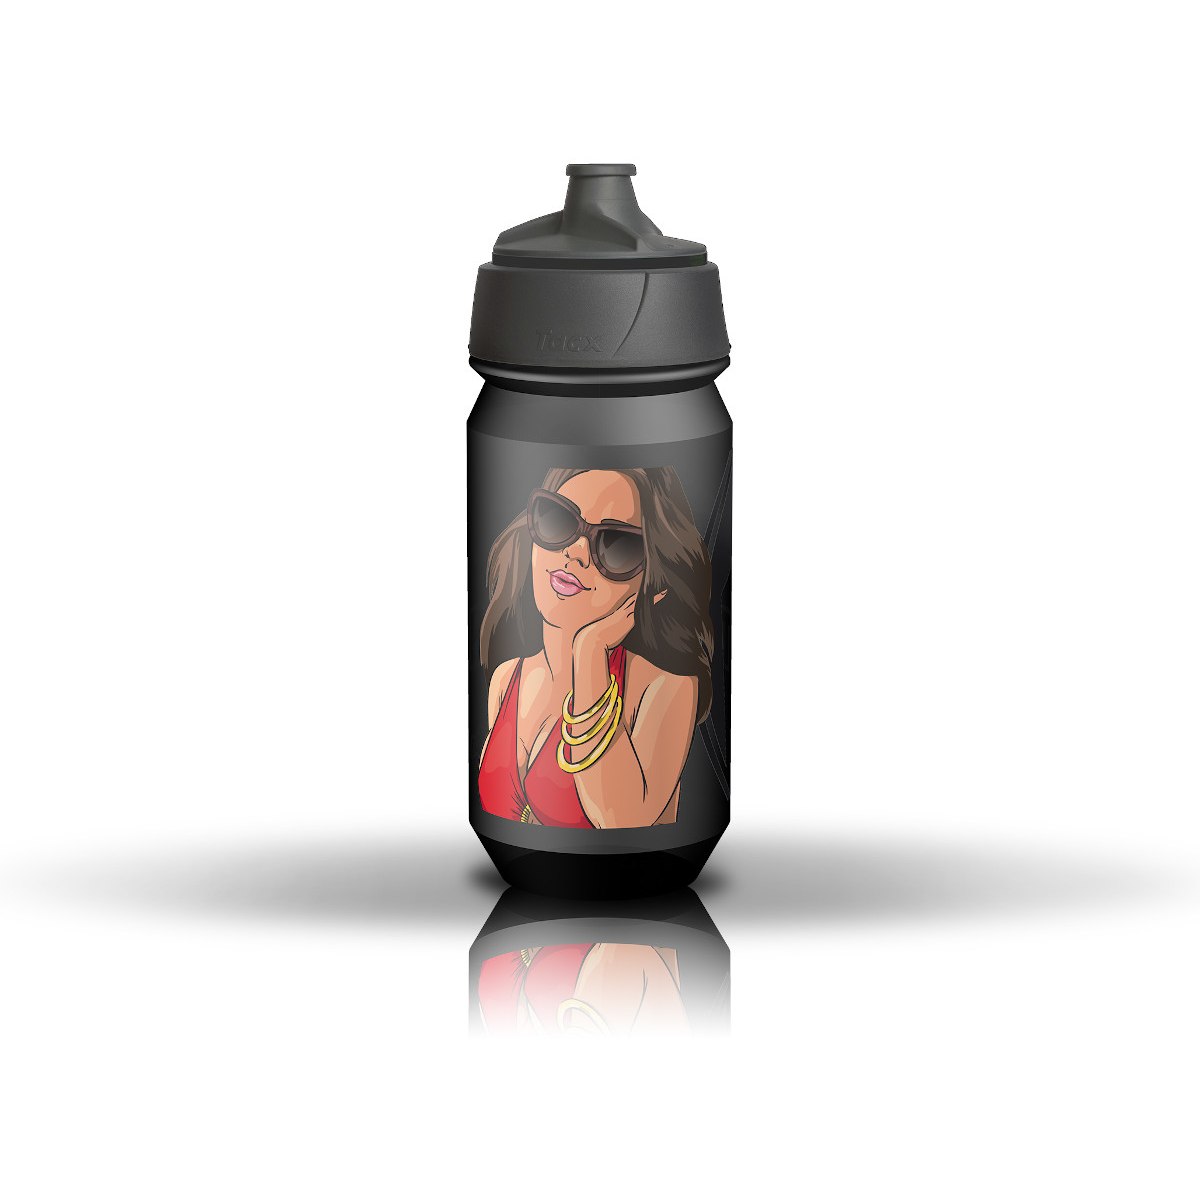 Productfoto van rie:sel design bot:tle Bottle 500ml - girl mk III